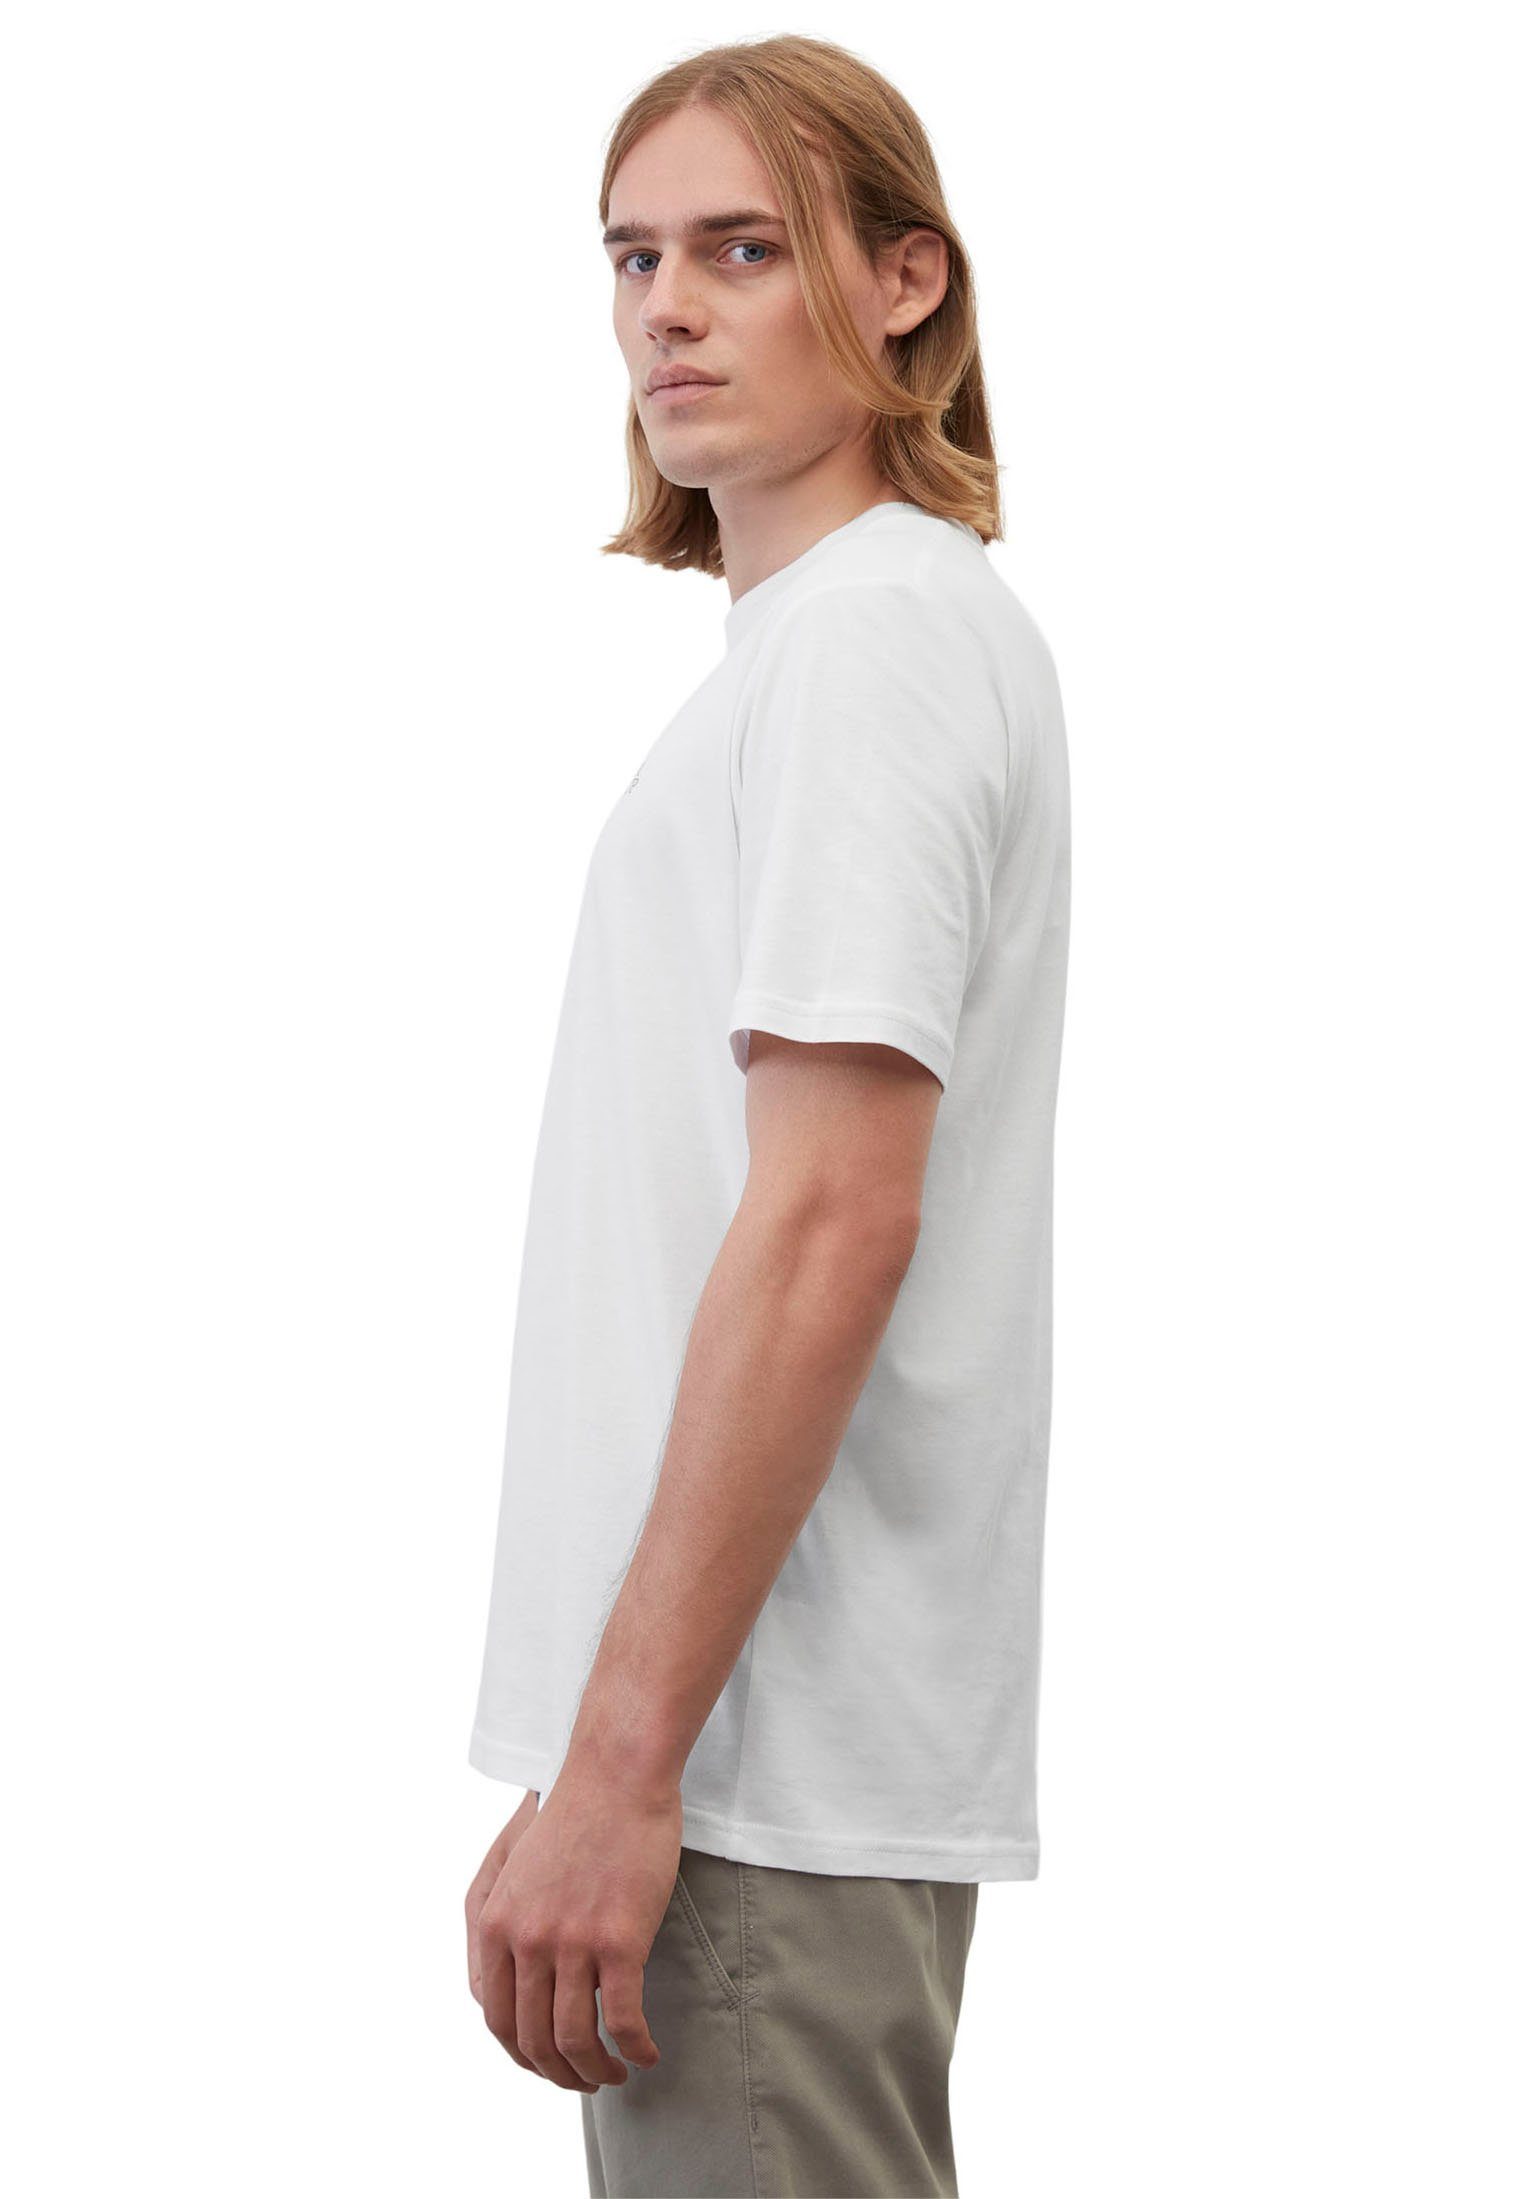 Marc O'Polo T-Shirt aus Logo-T-Shirt Bio-Baumwolle weiß